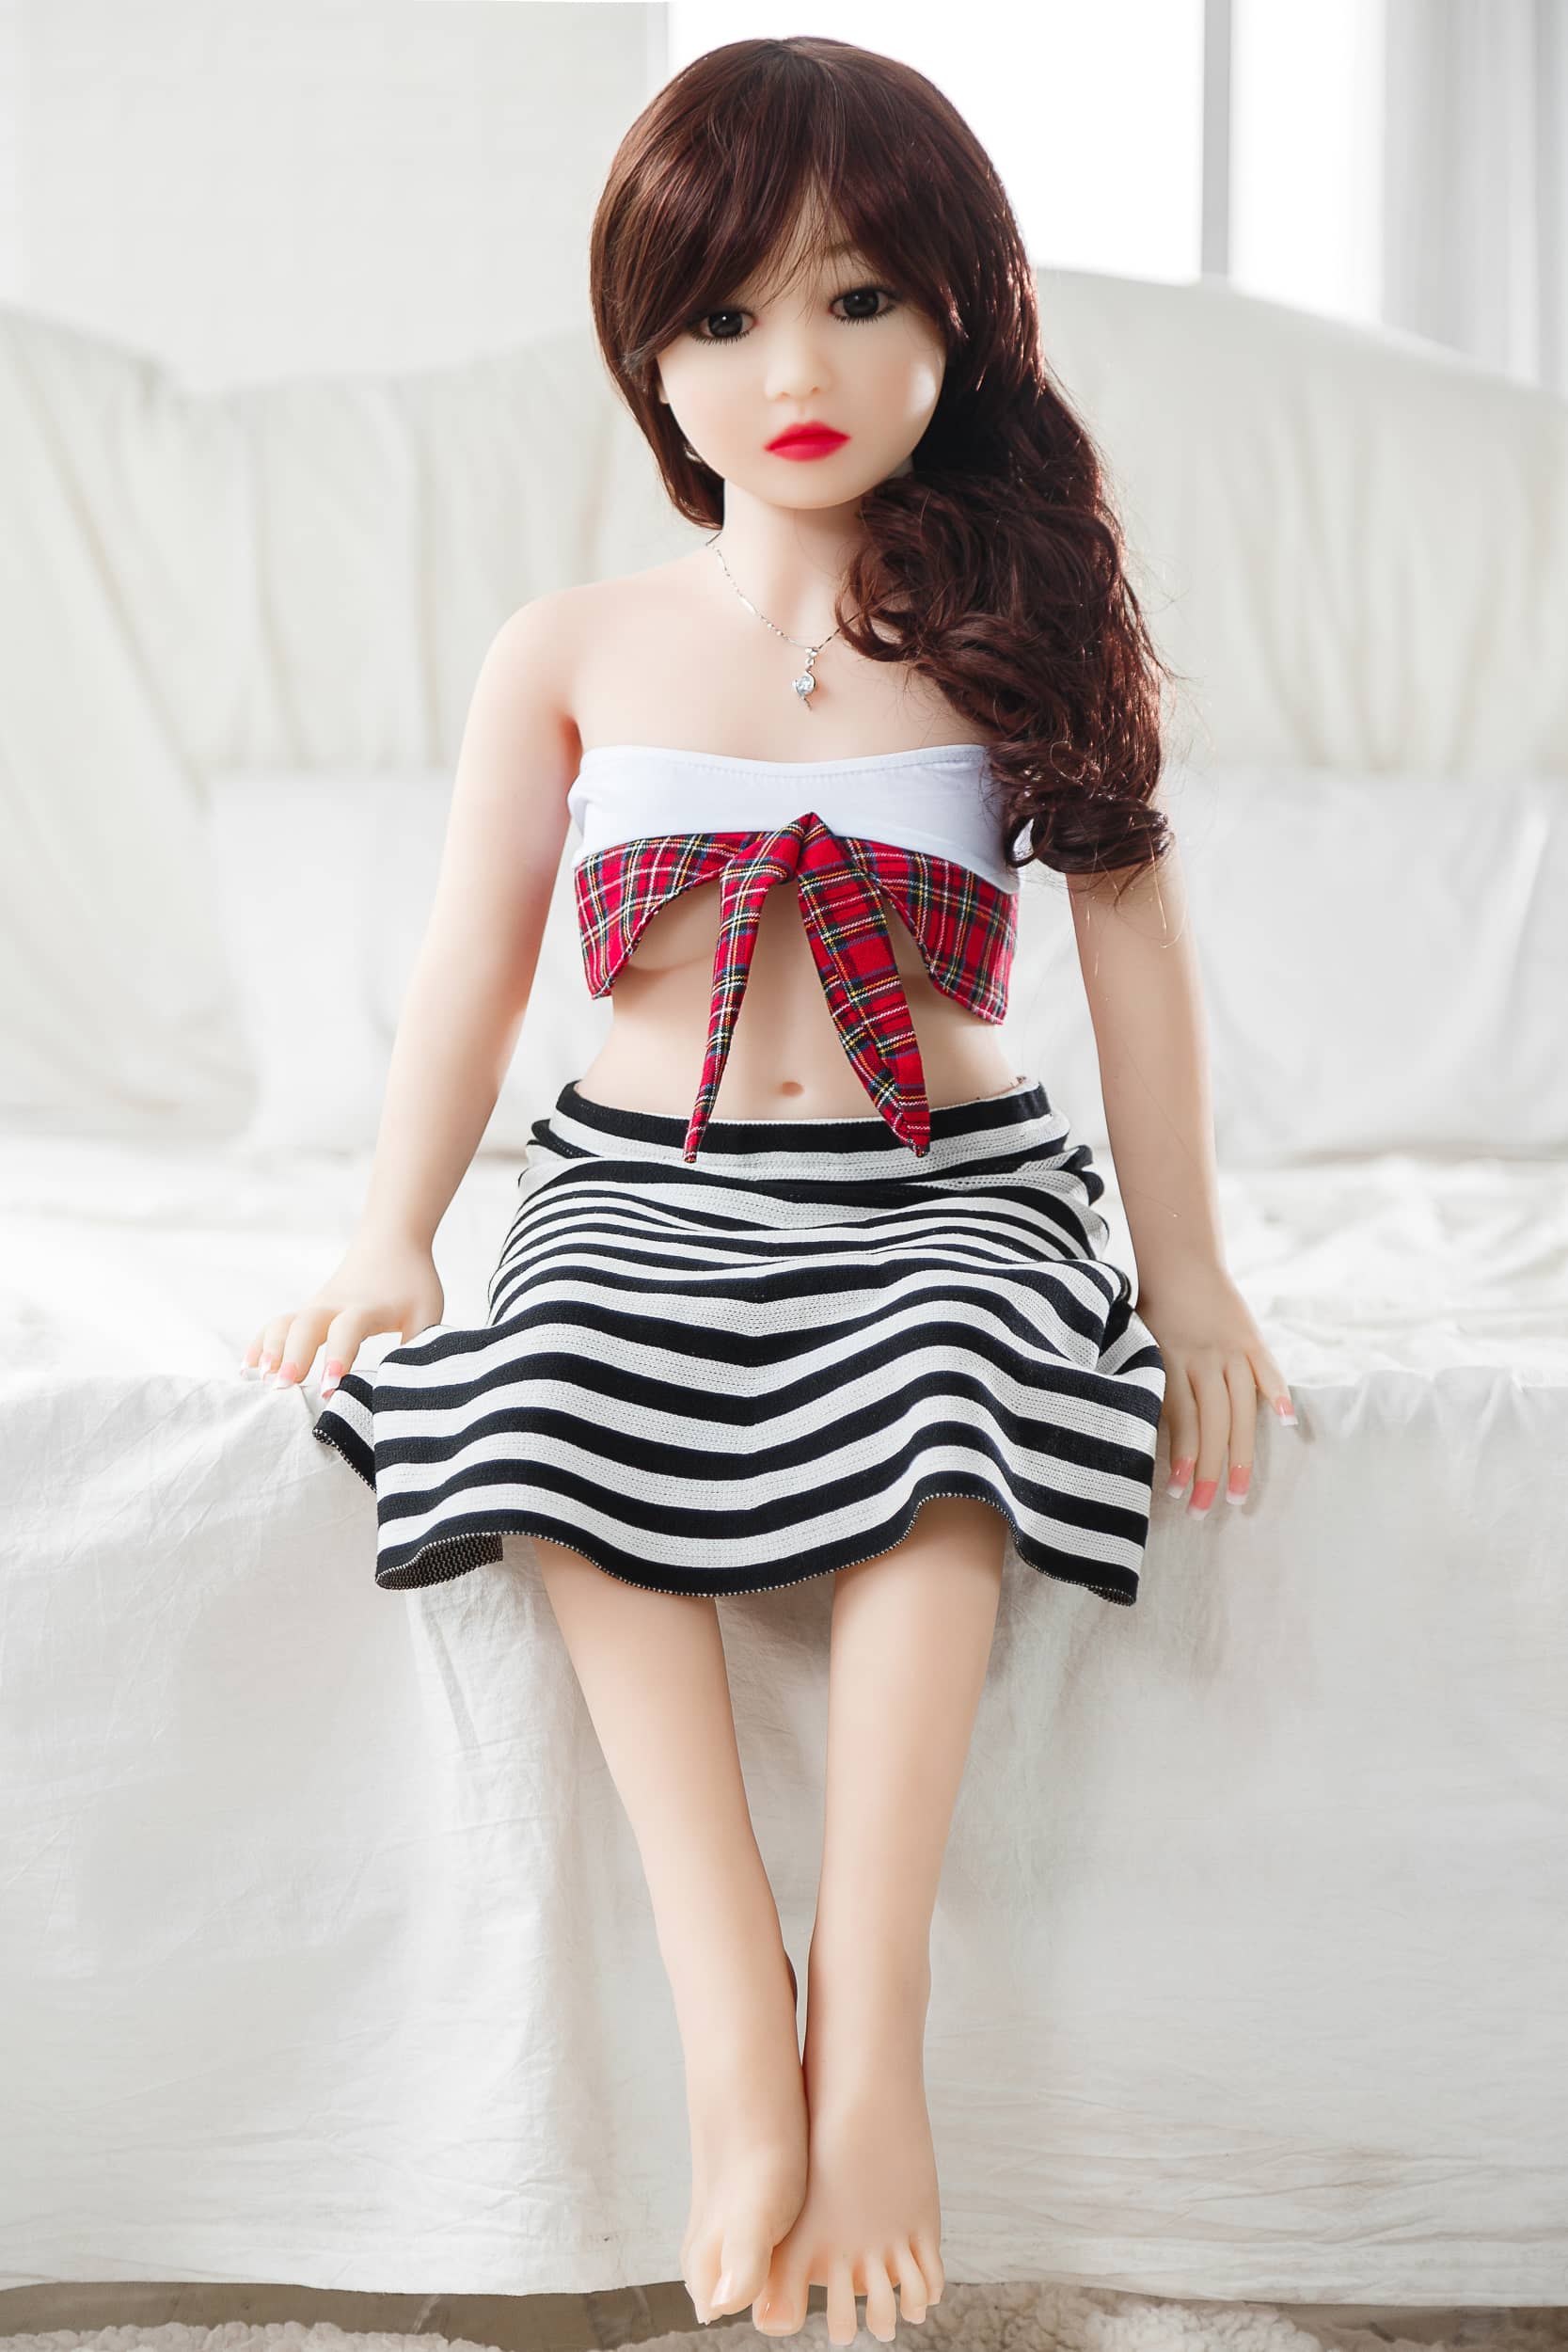 Mini Love Doll Aibei Doll 100cm (3.28') TPE Small Breast #16 - Ava (NO.134) Aibei Doll Littlelovedoll